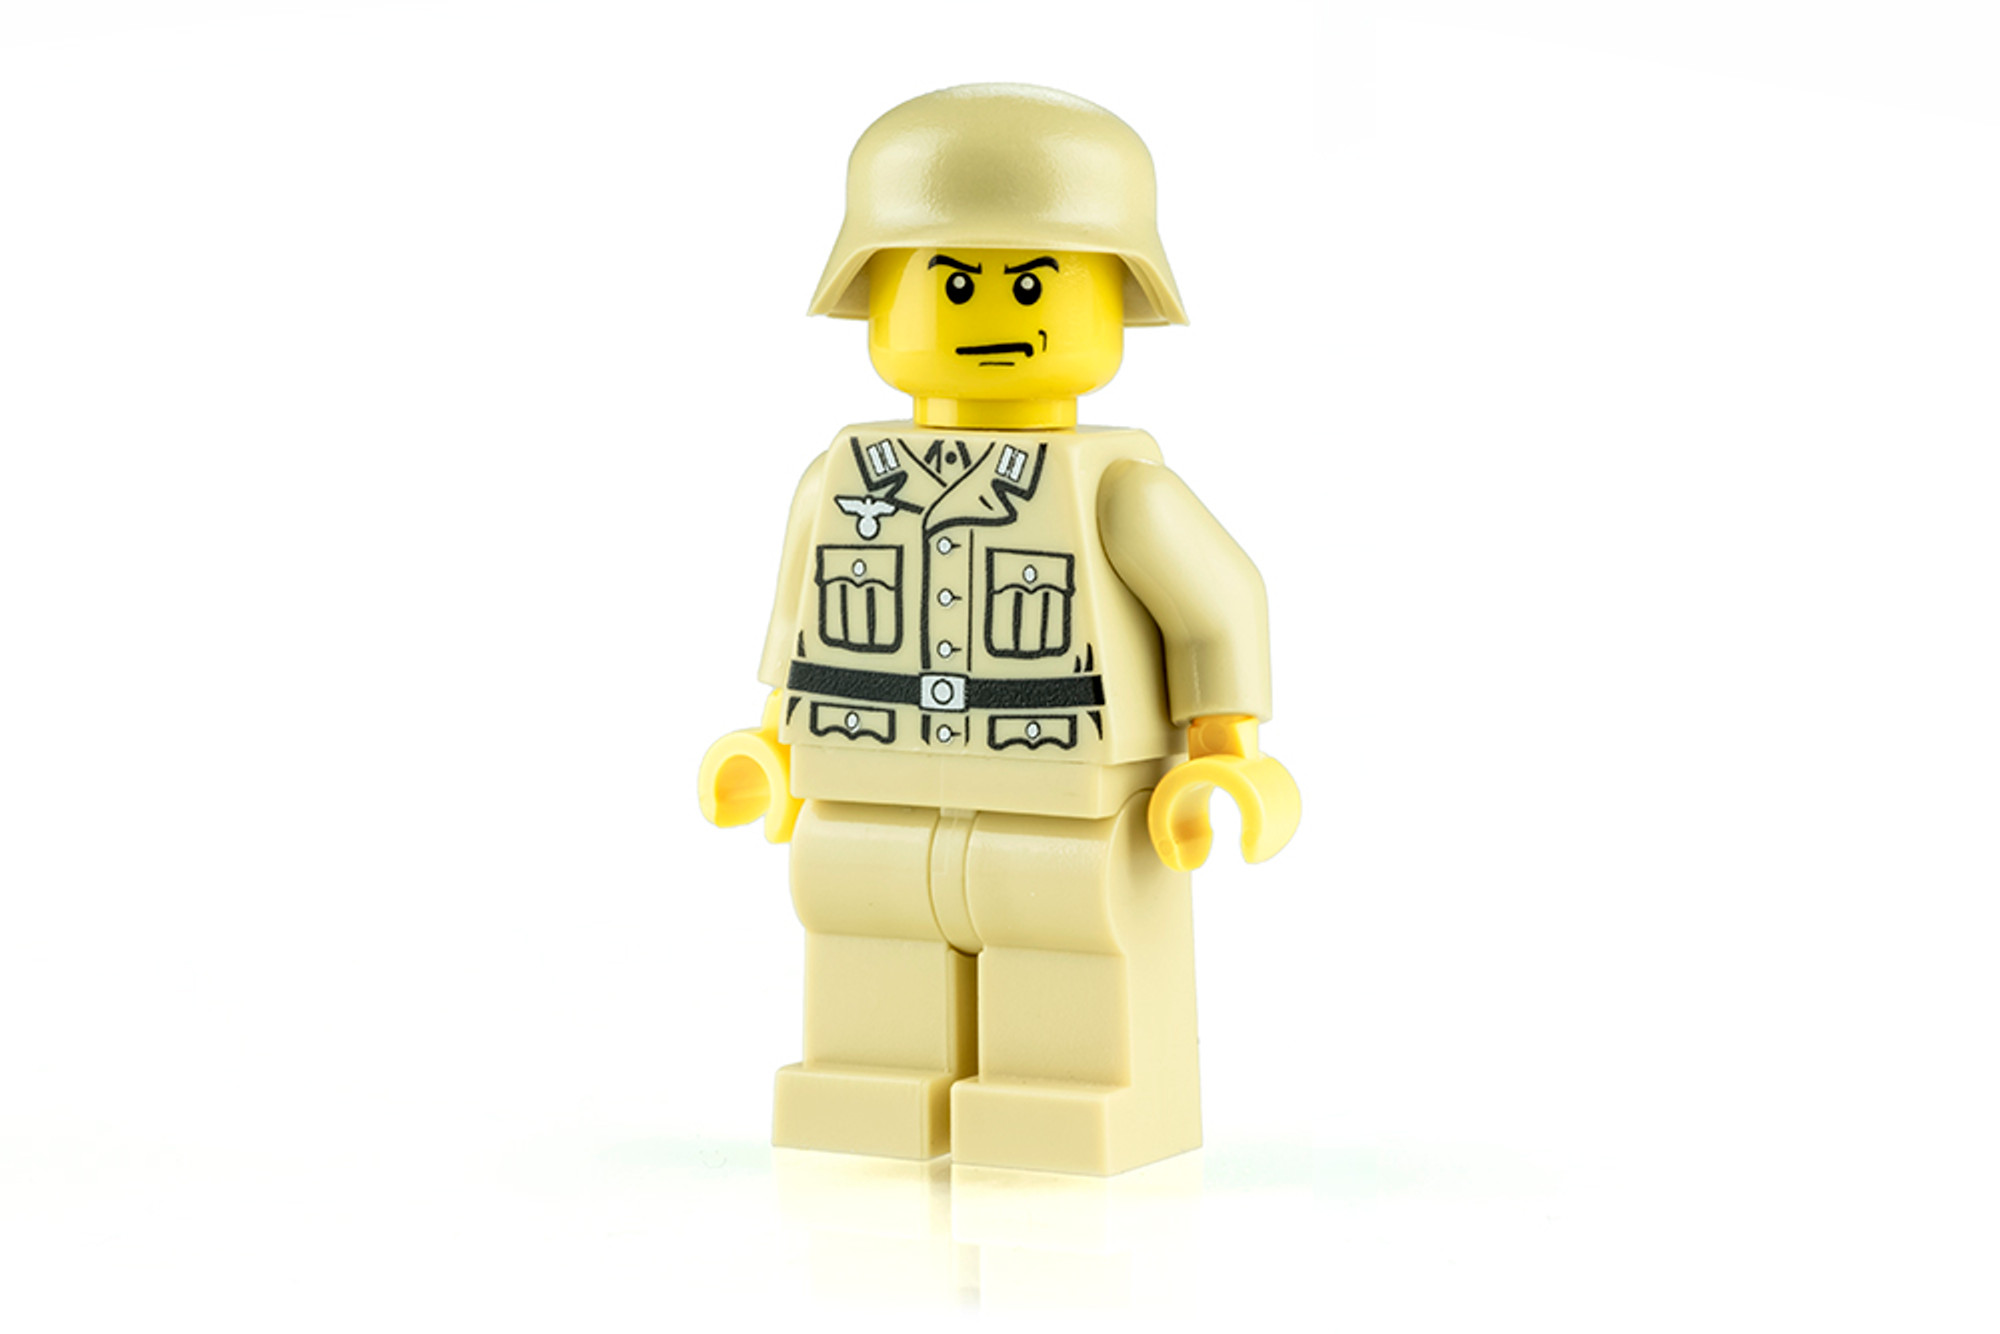 Cold War East German Soldier, LEGO Minifigure